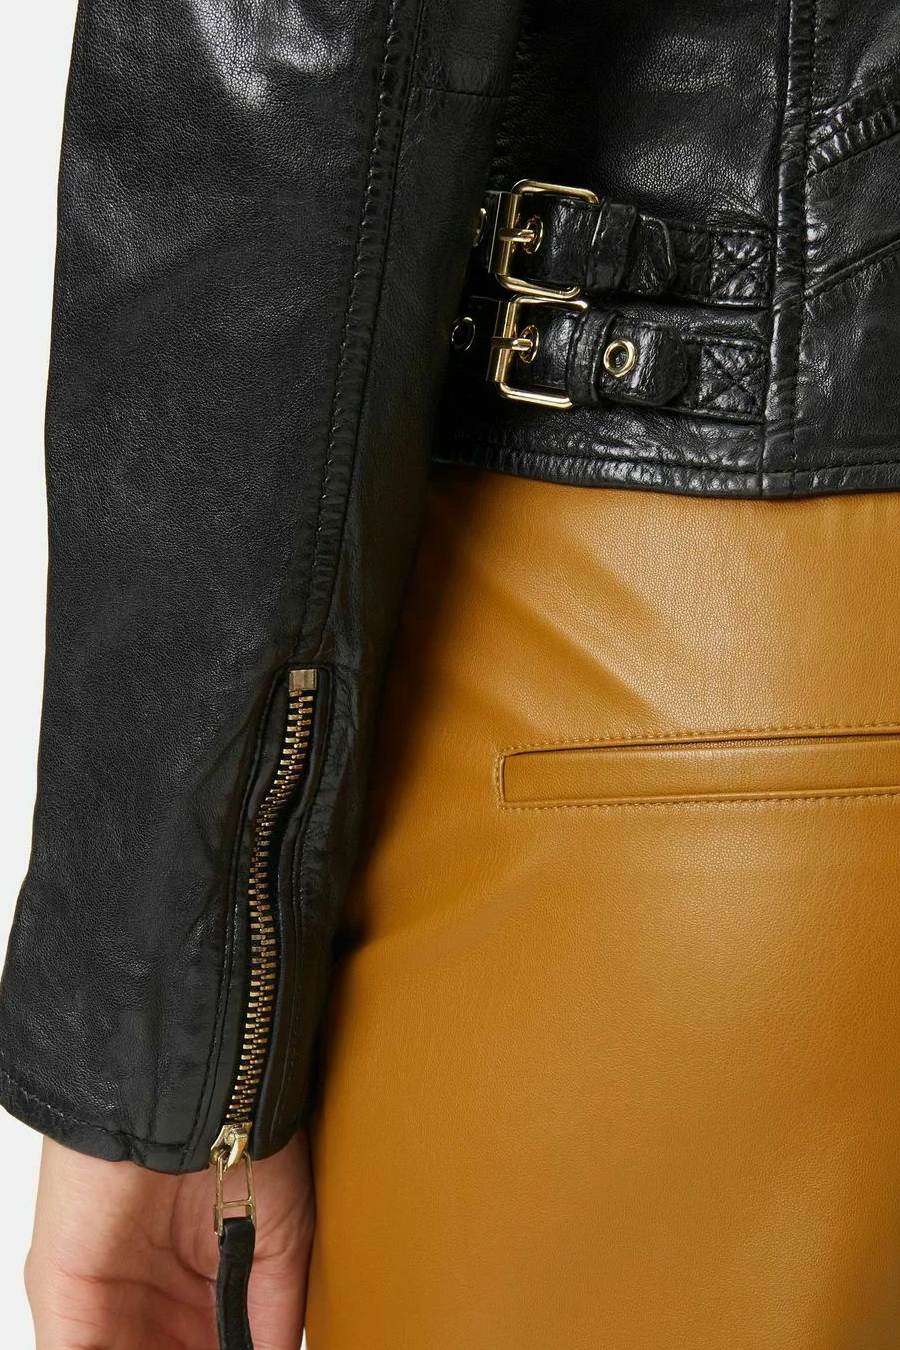 Leather jacket GIPSY 1101-0536-black